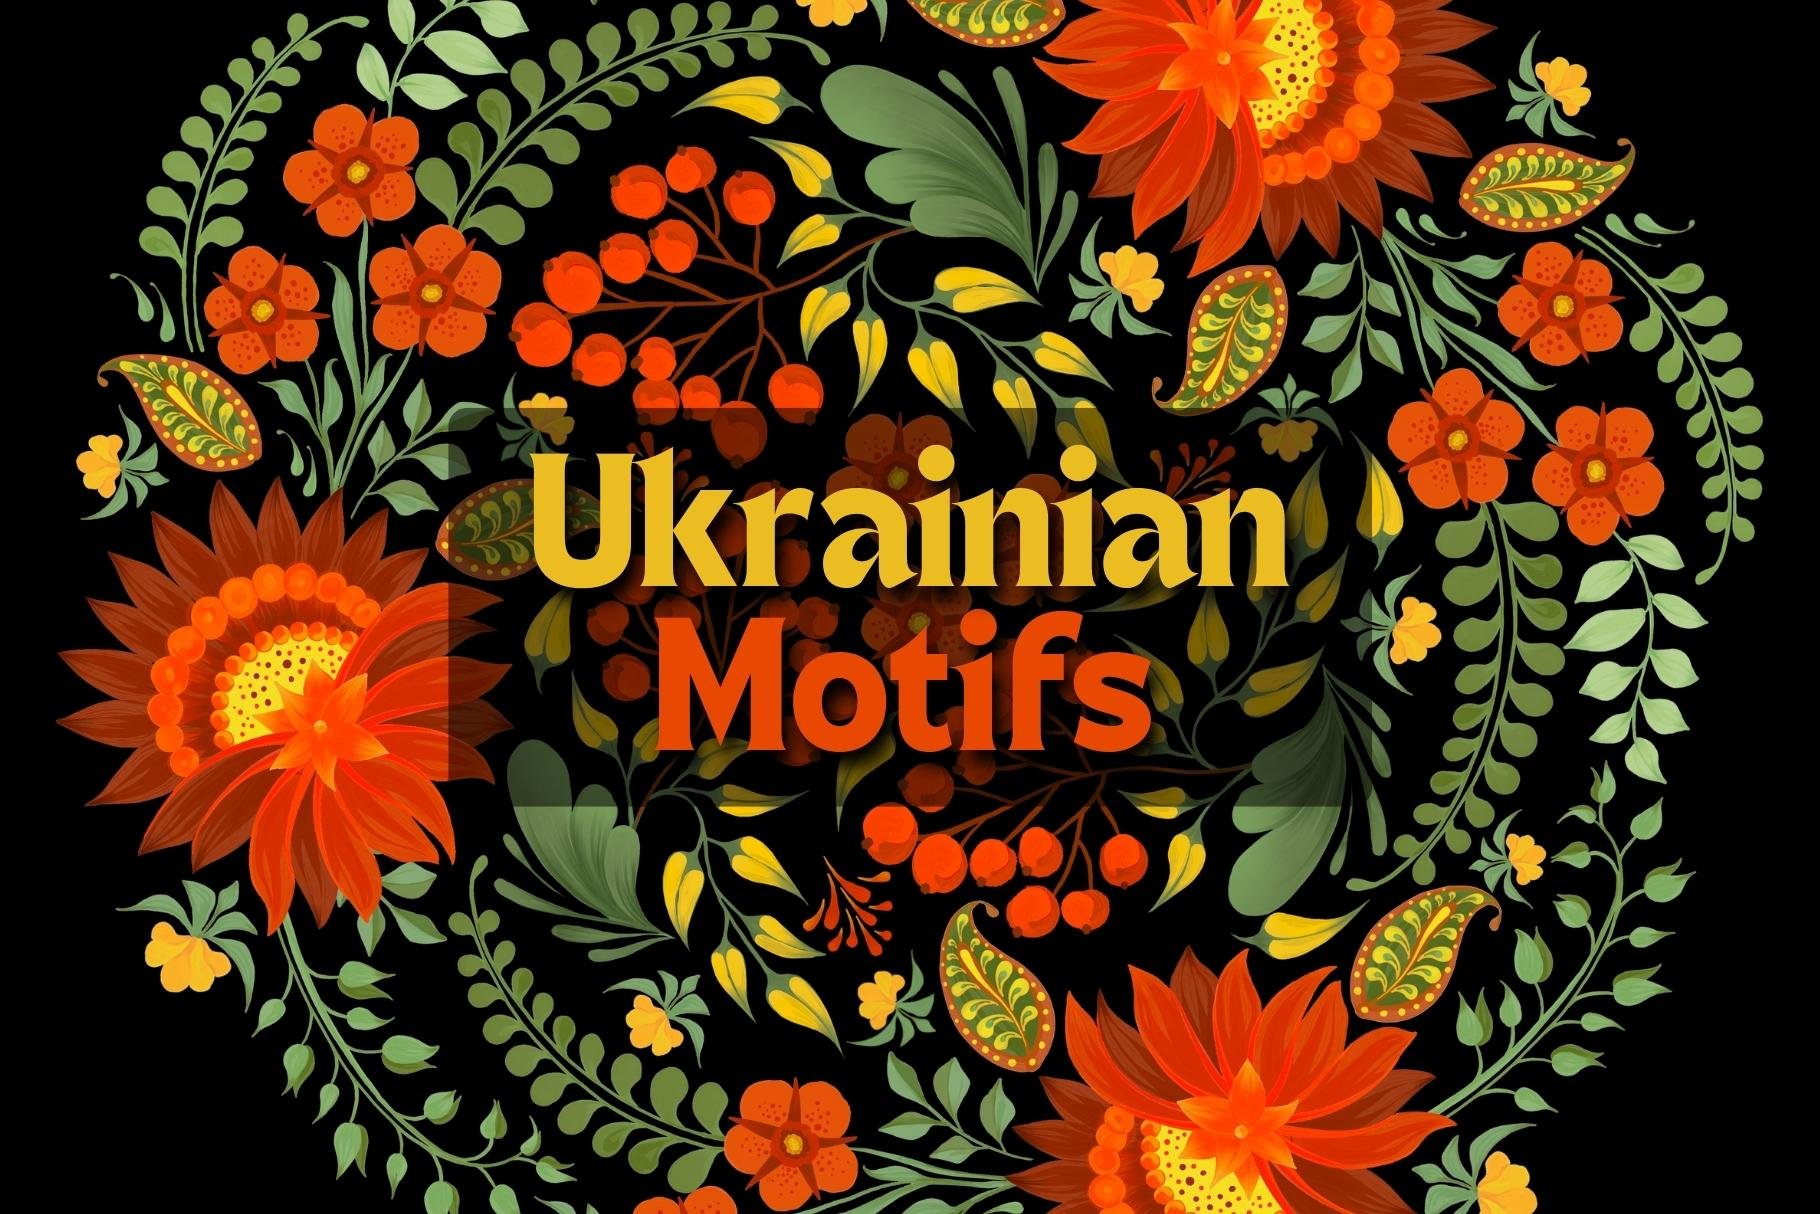 Ukrainian Motifs cover image.